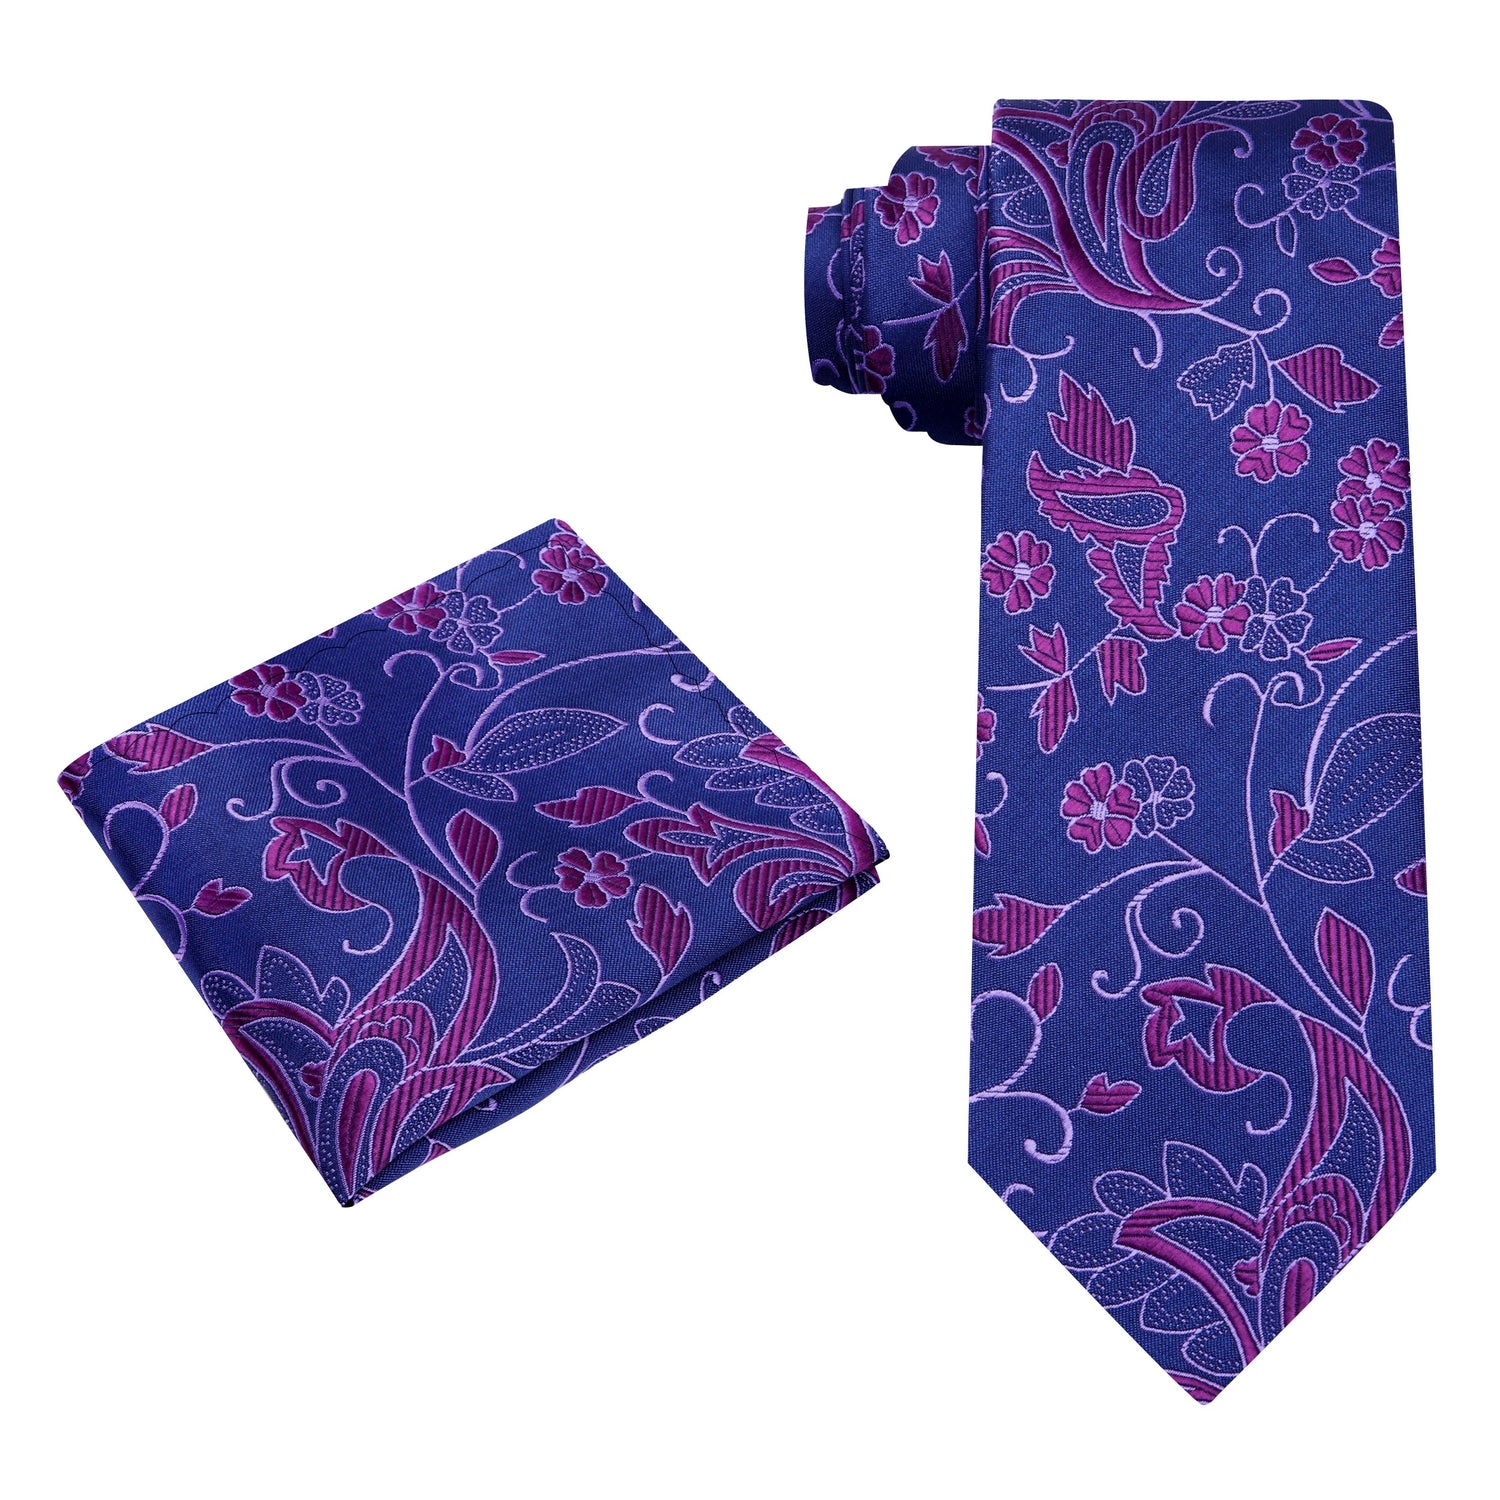 Alt View: A Purple, Royal Floral Pattern Silk Necktie, Matching Pocket Square